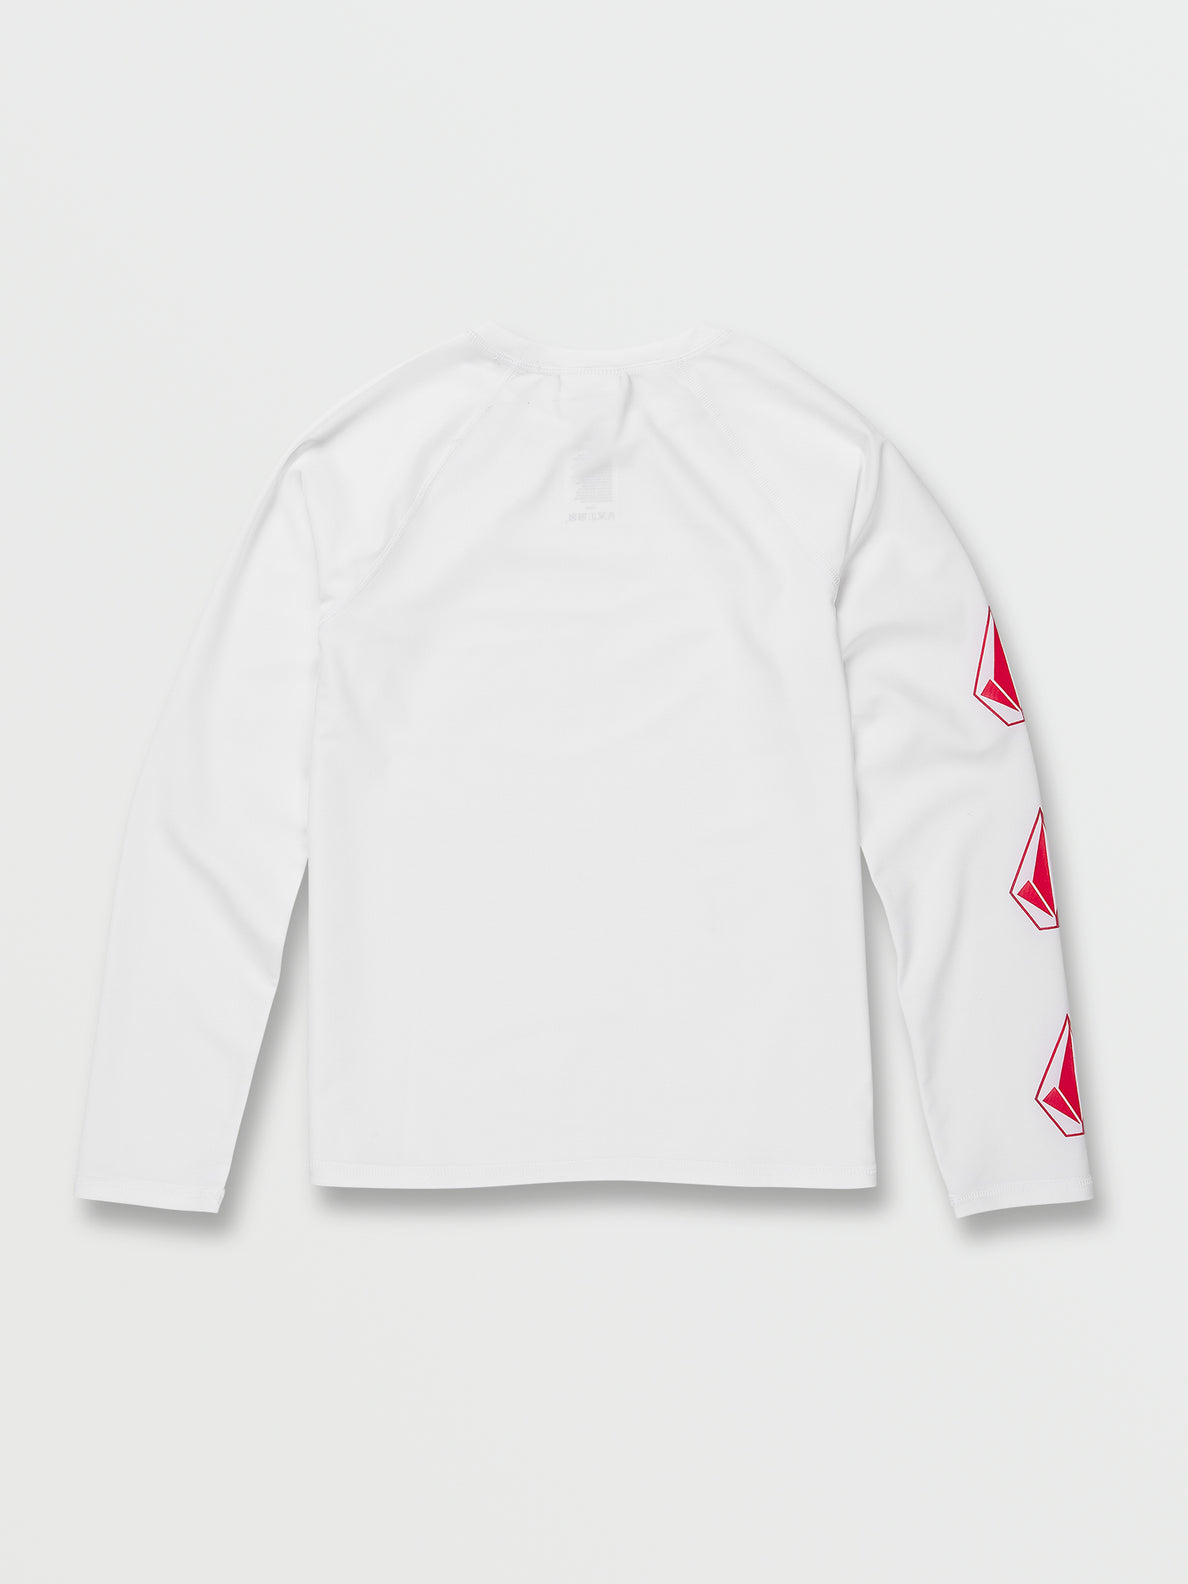 Simply Core Long Sleeve Shirt - Candy Apple (Q0312300_CDY) [B]